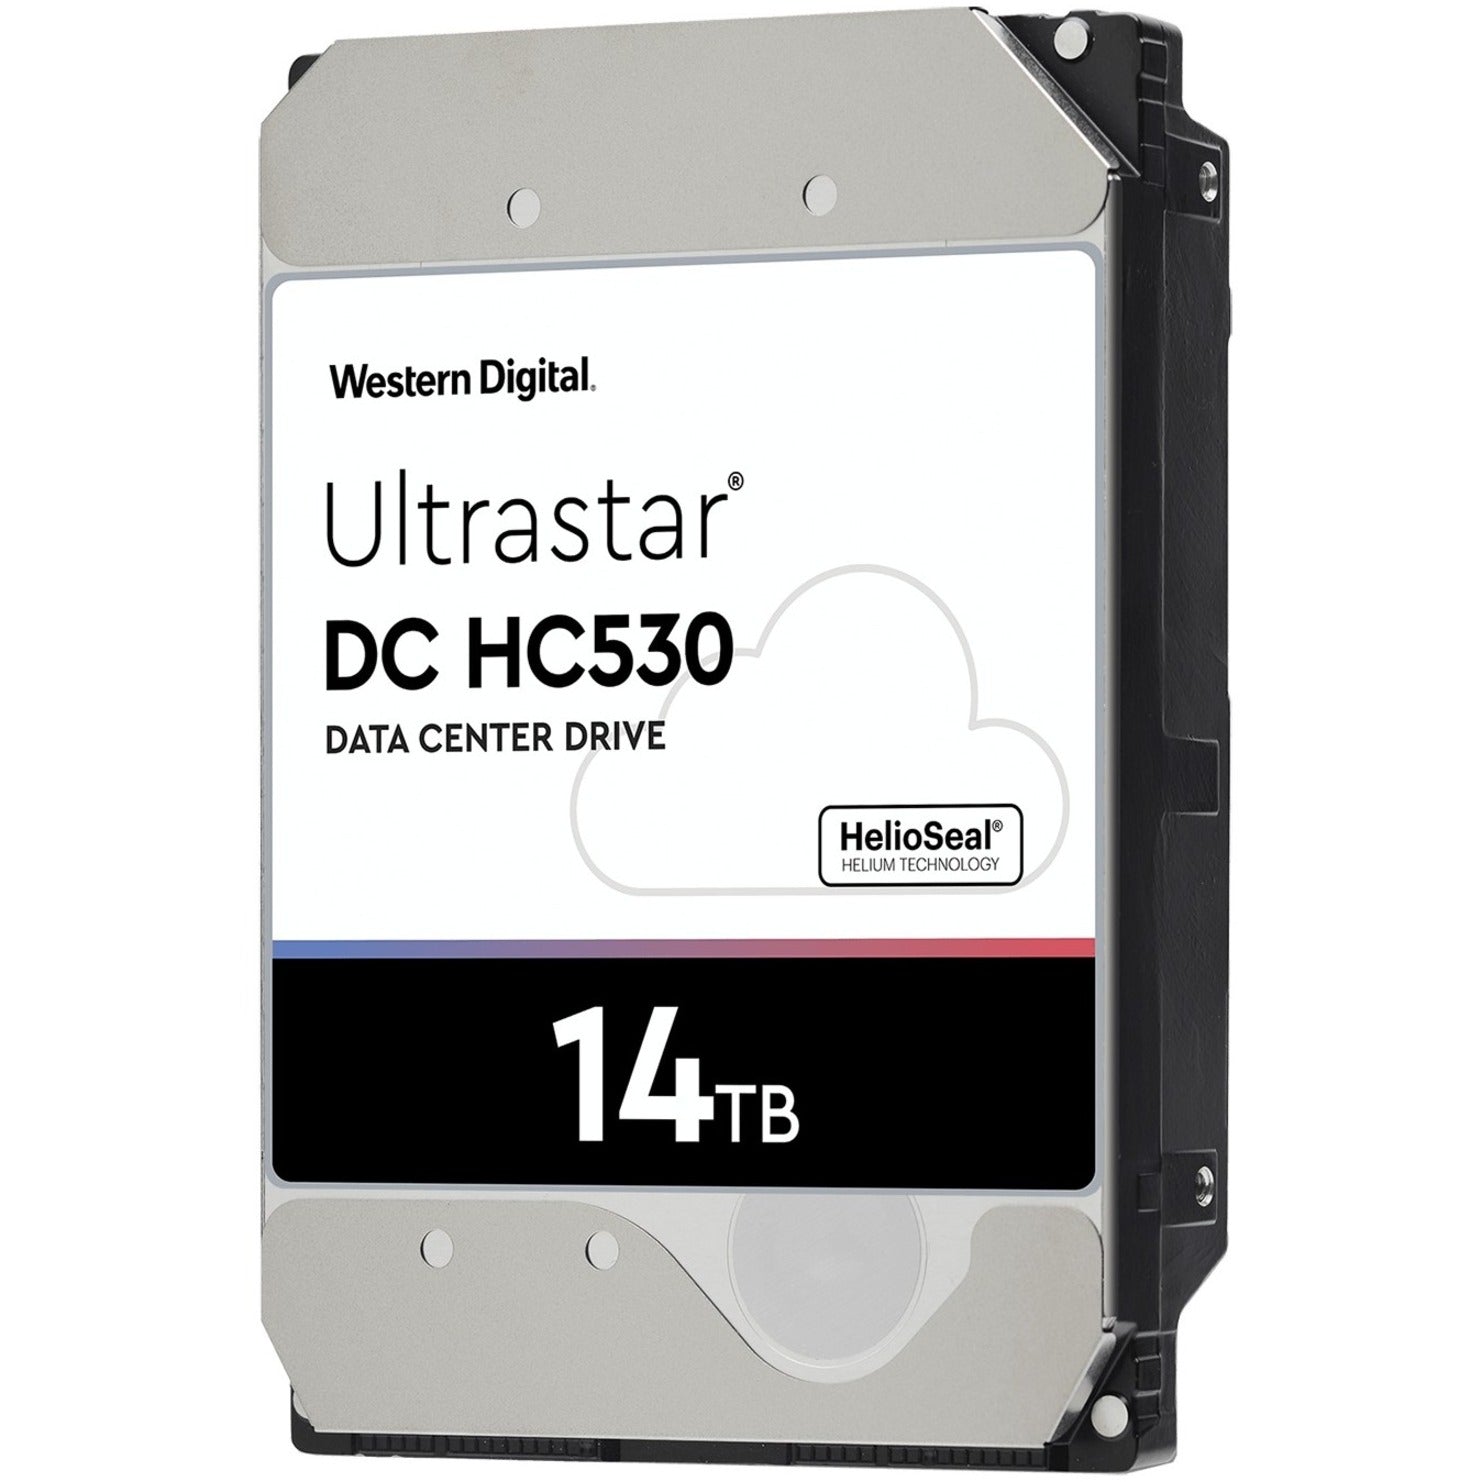 Western Digital Ultrastar DC HC530 14TB SATA Hard Drive [Discontinued]